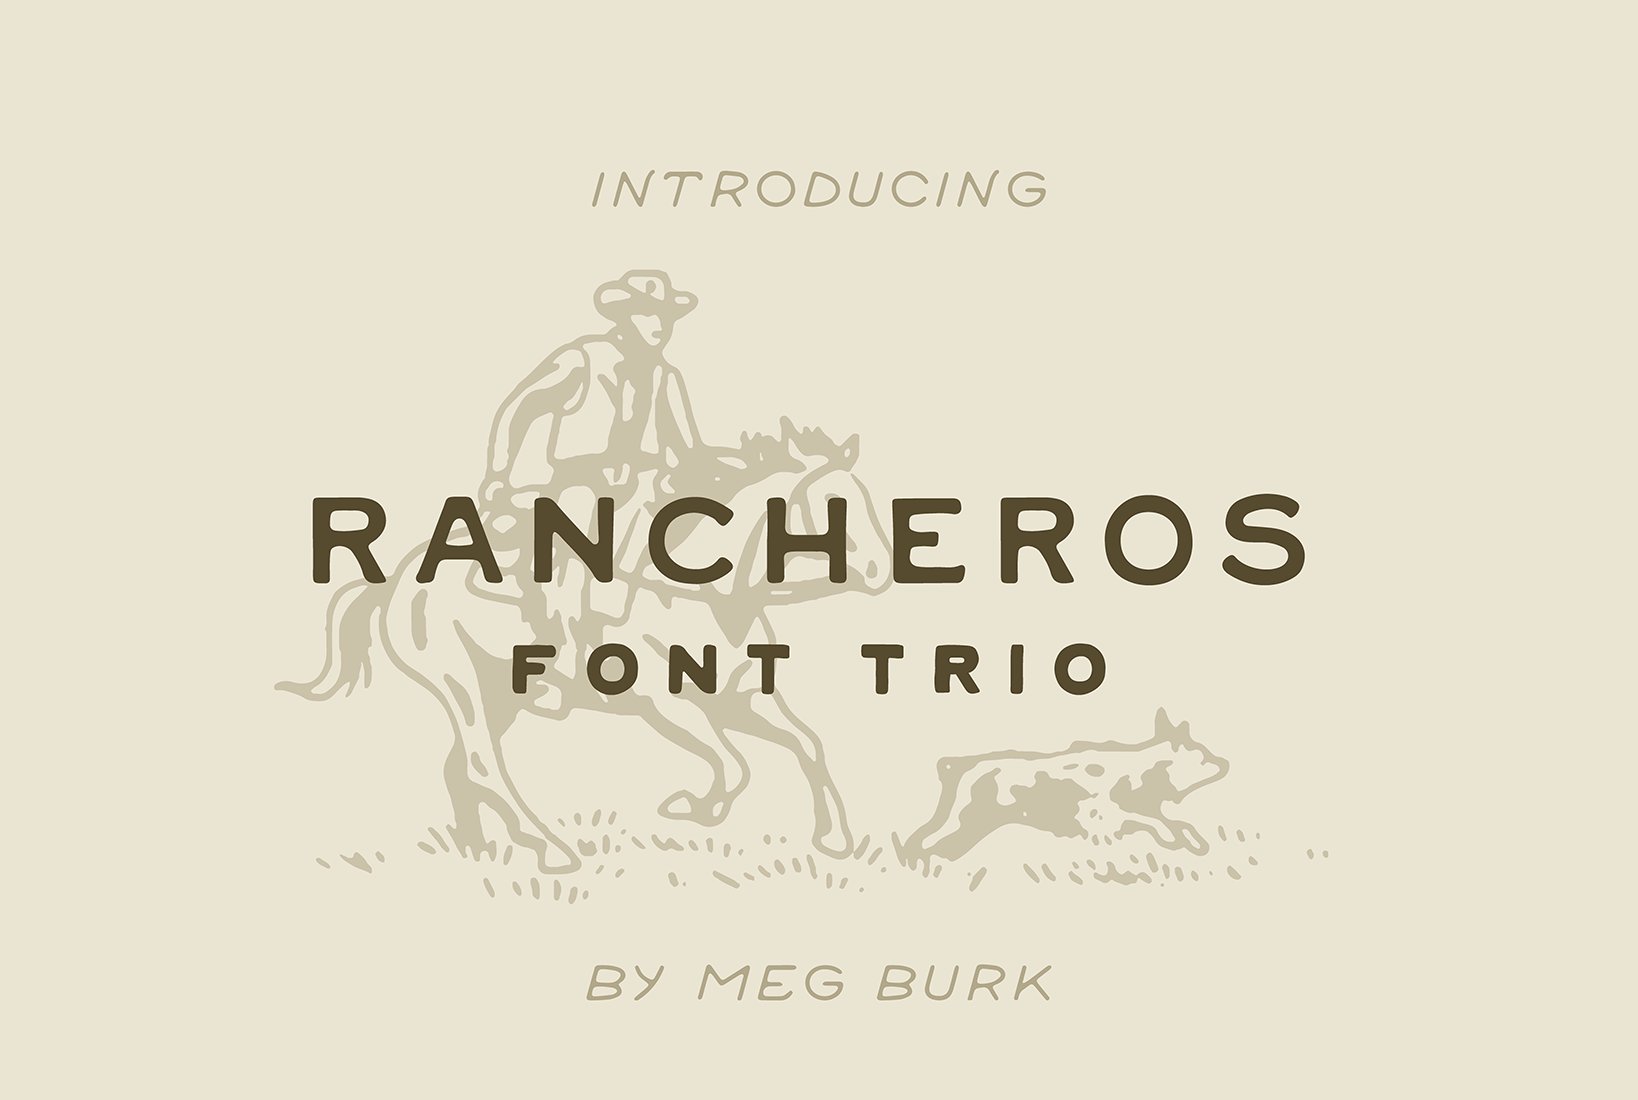 Rancheros - Western Font Trio cover image.